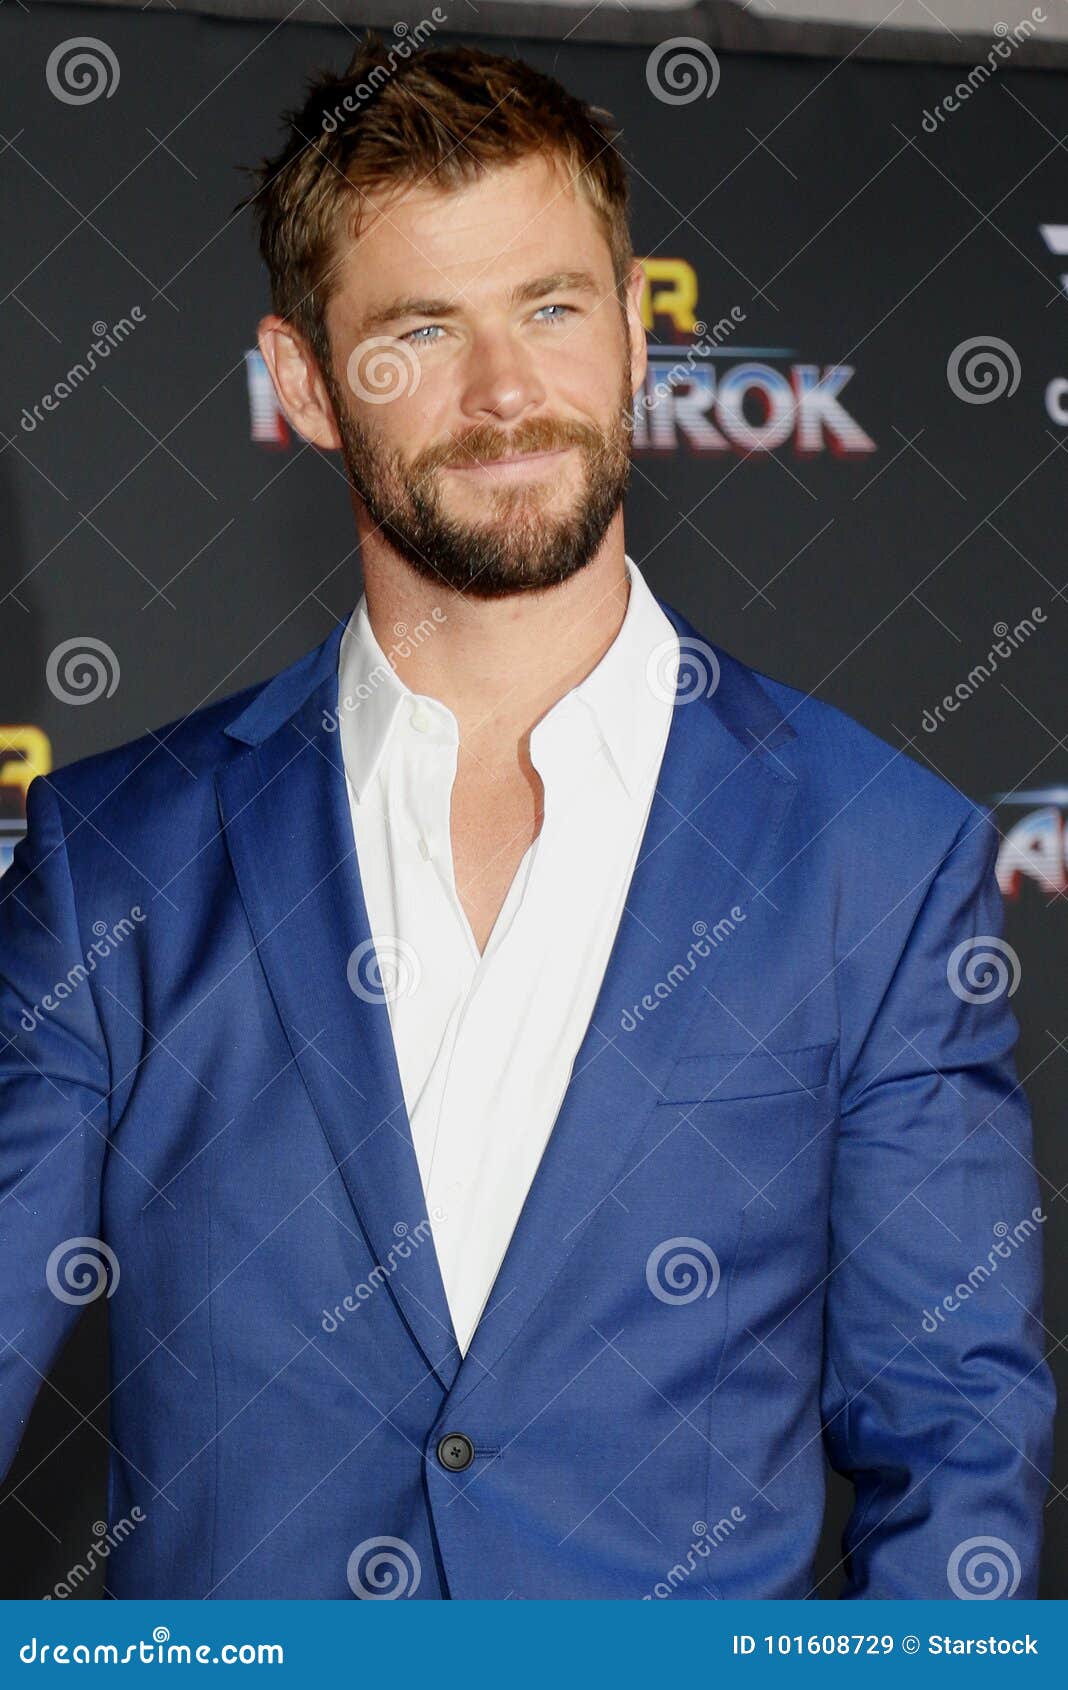 Chris Hemsworth at Thor Ragnarok premiere in LA.